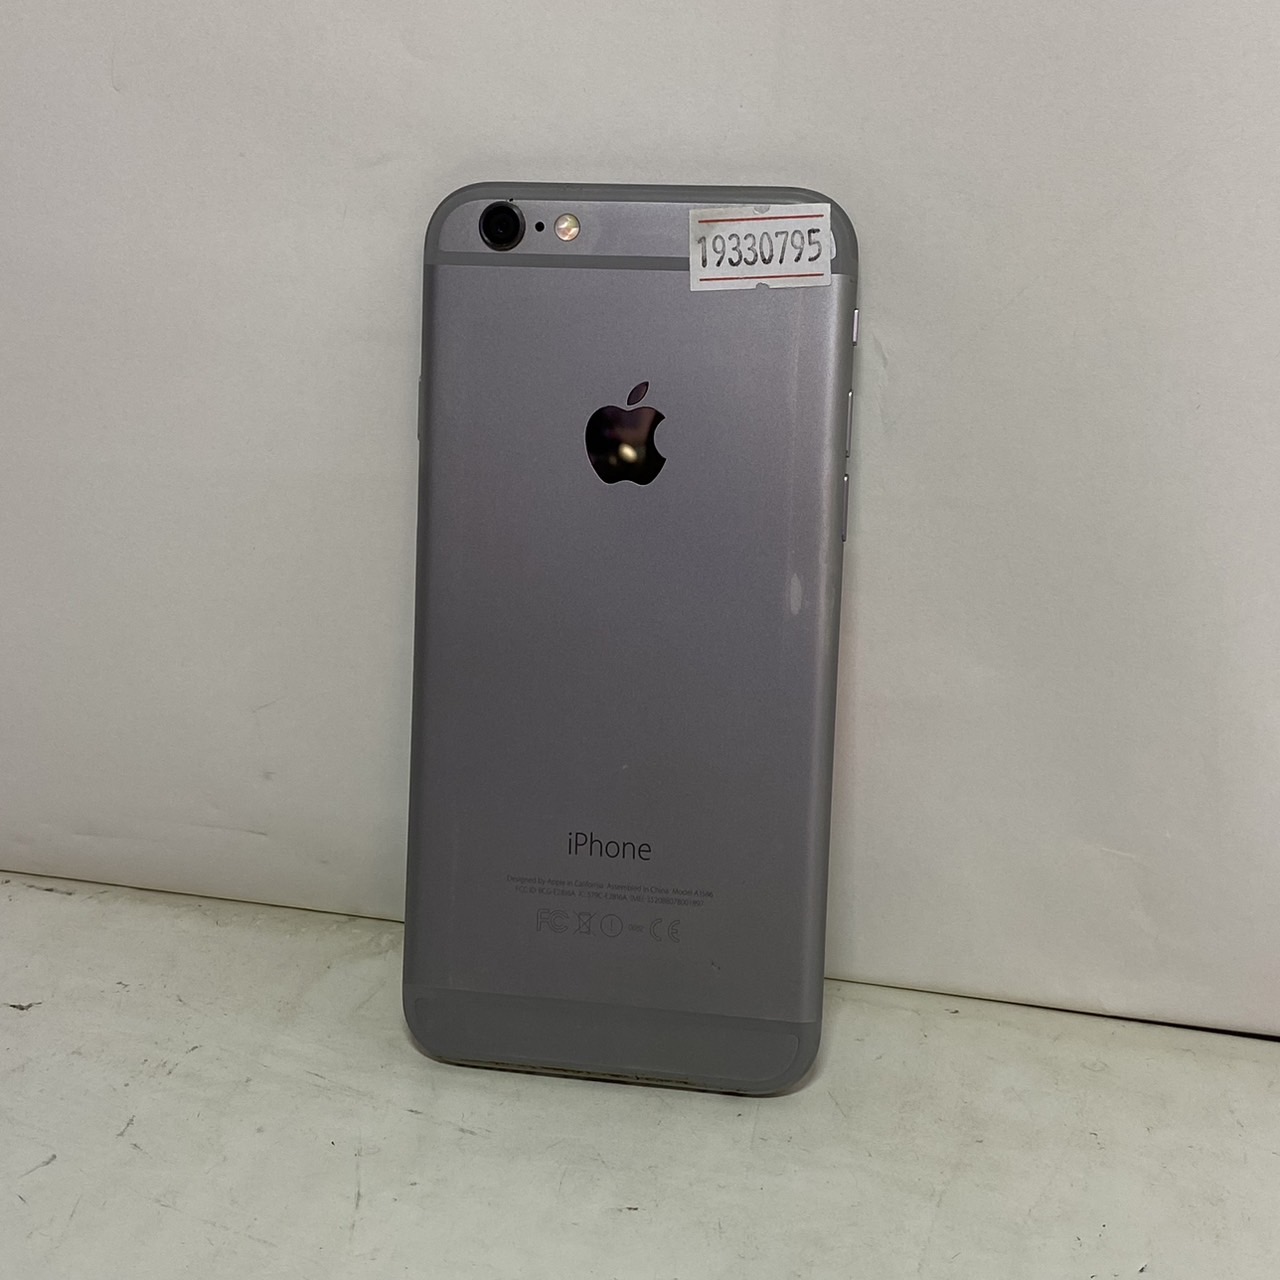 docomo(NTTドコモ) iPhone 6 16GB MG472J/A